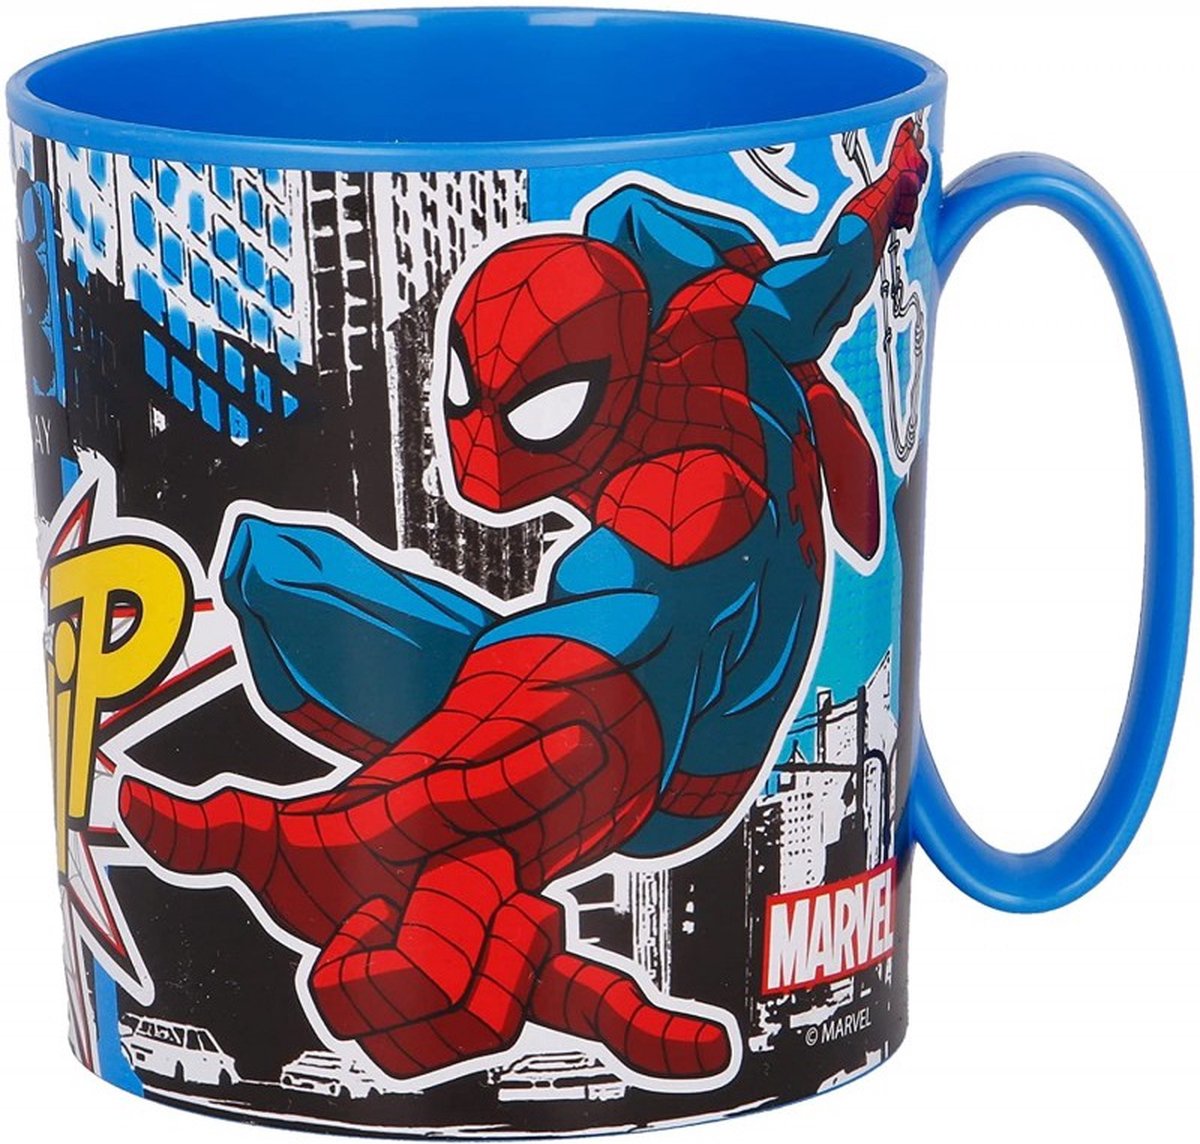 Spiderman mok - Spiderman beker - 350ml - BPA vrij